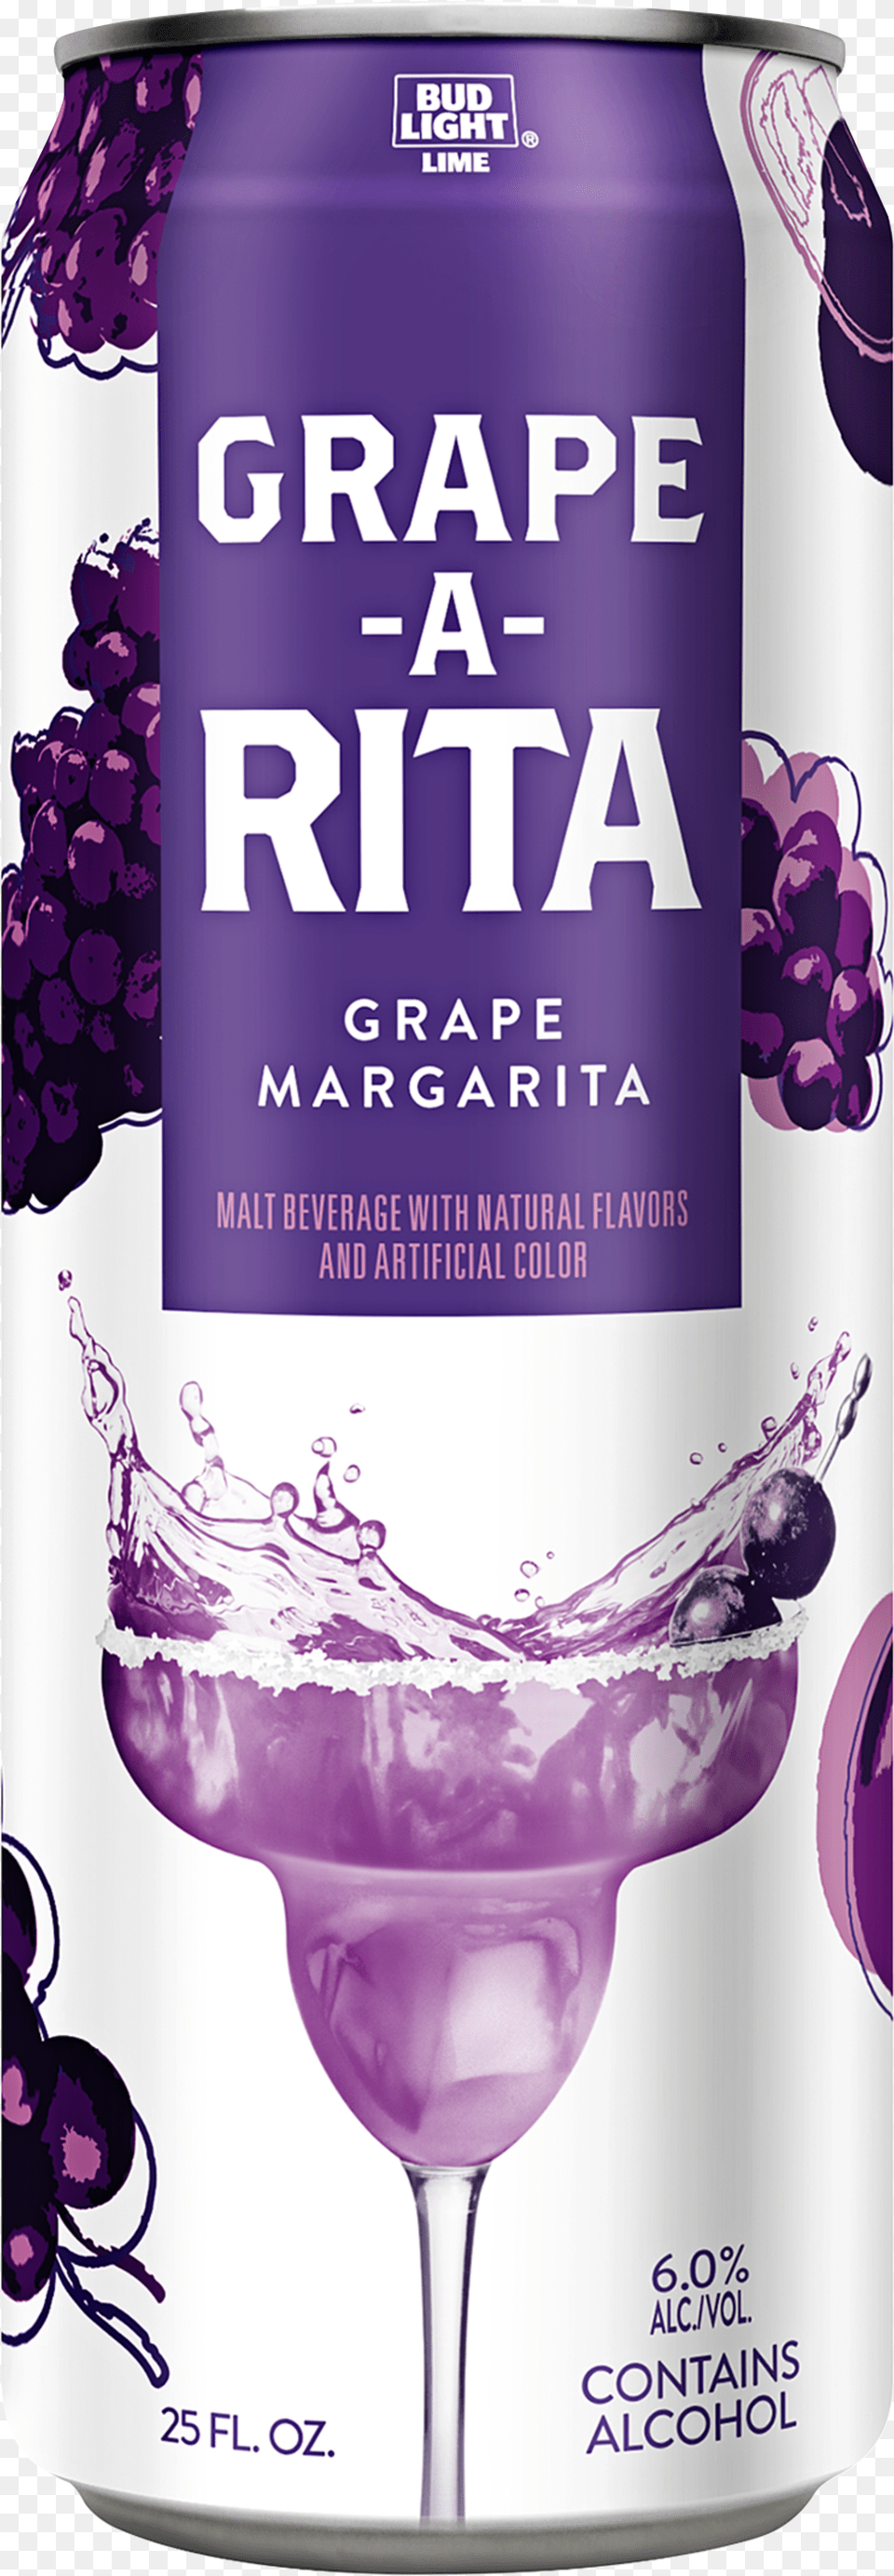 Grape Rita Grape Rita Bud Light Png